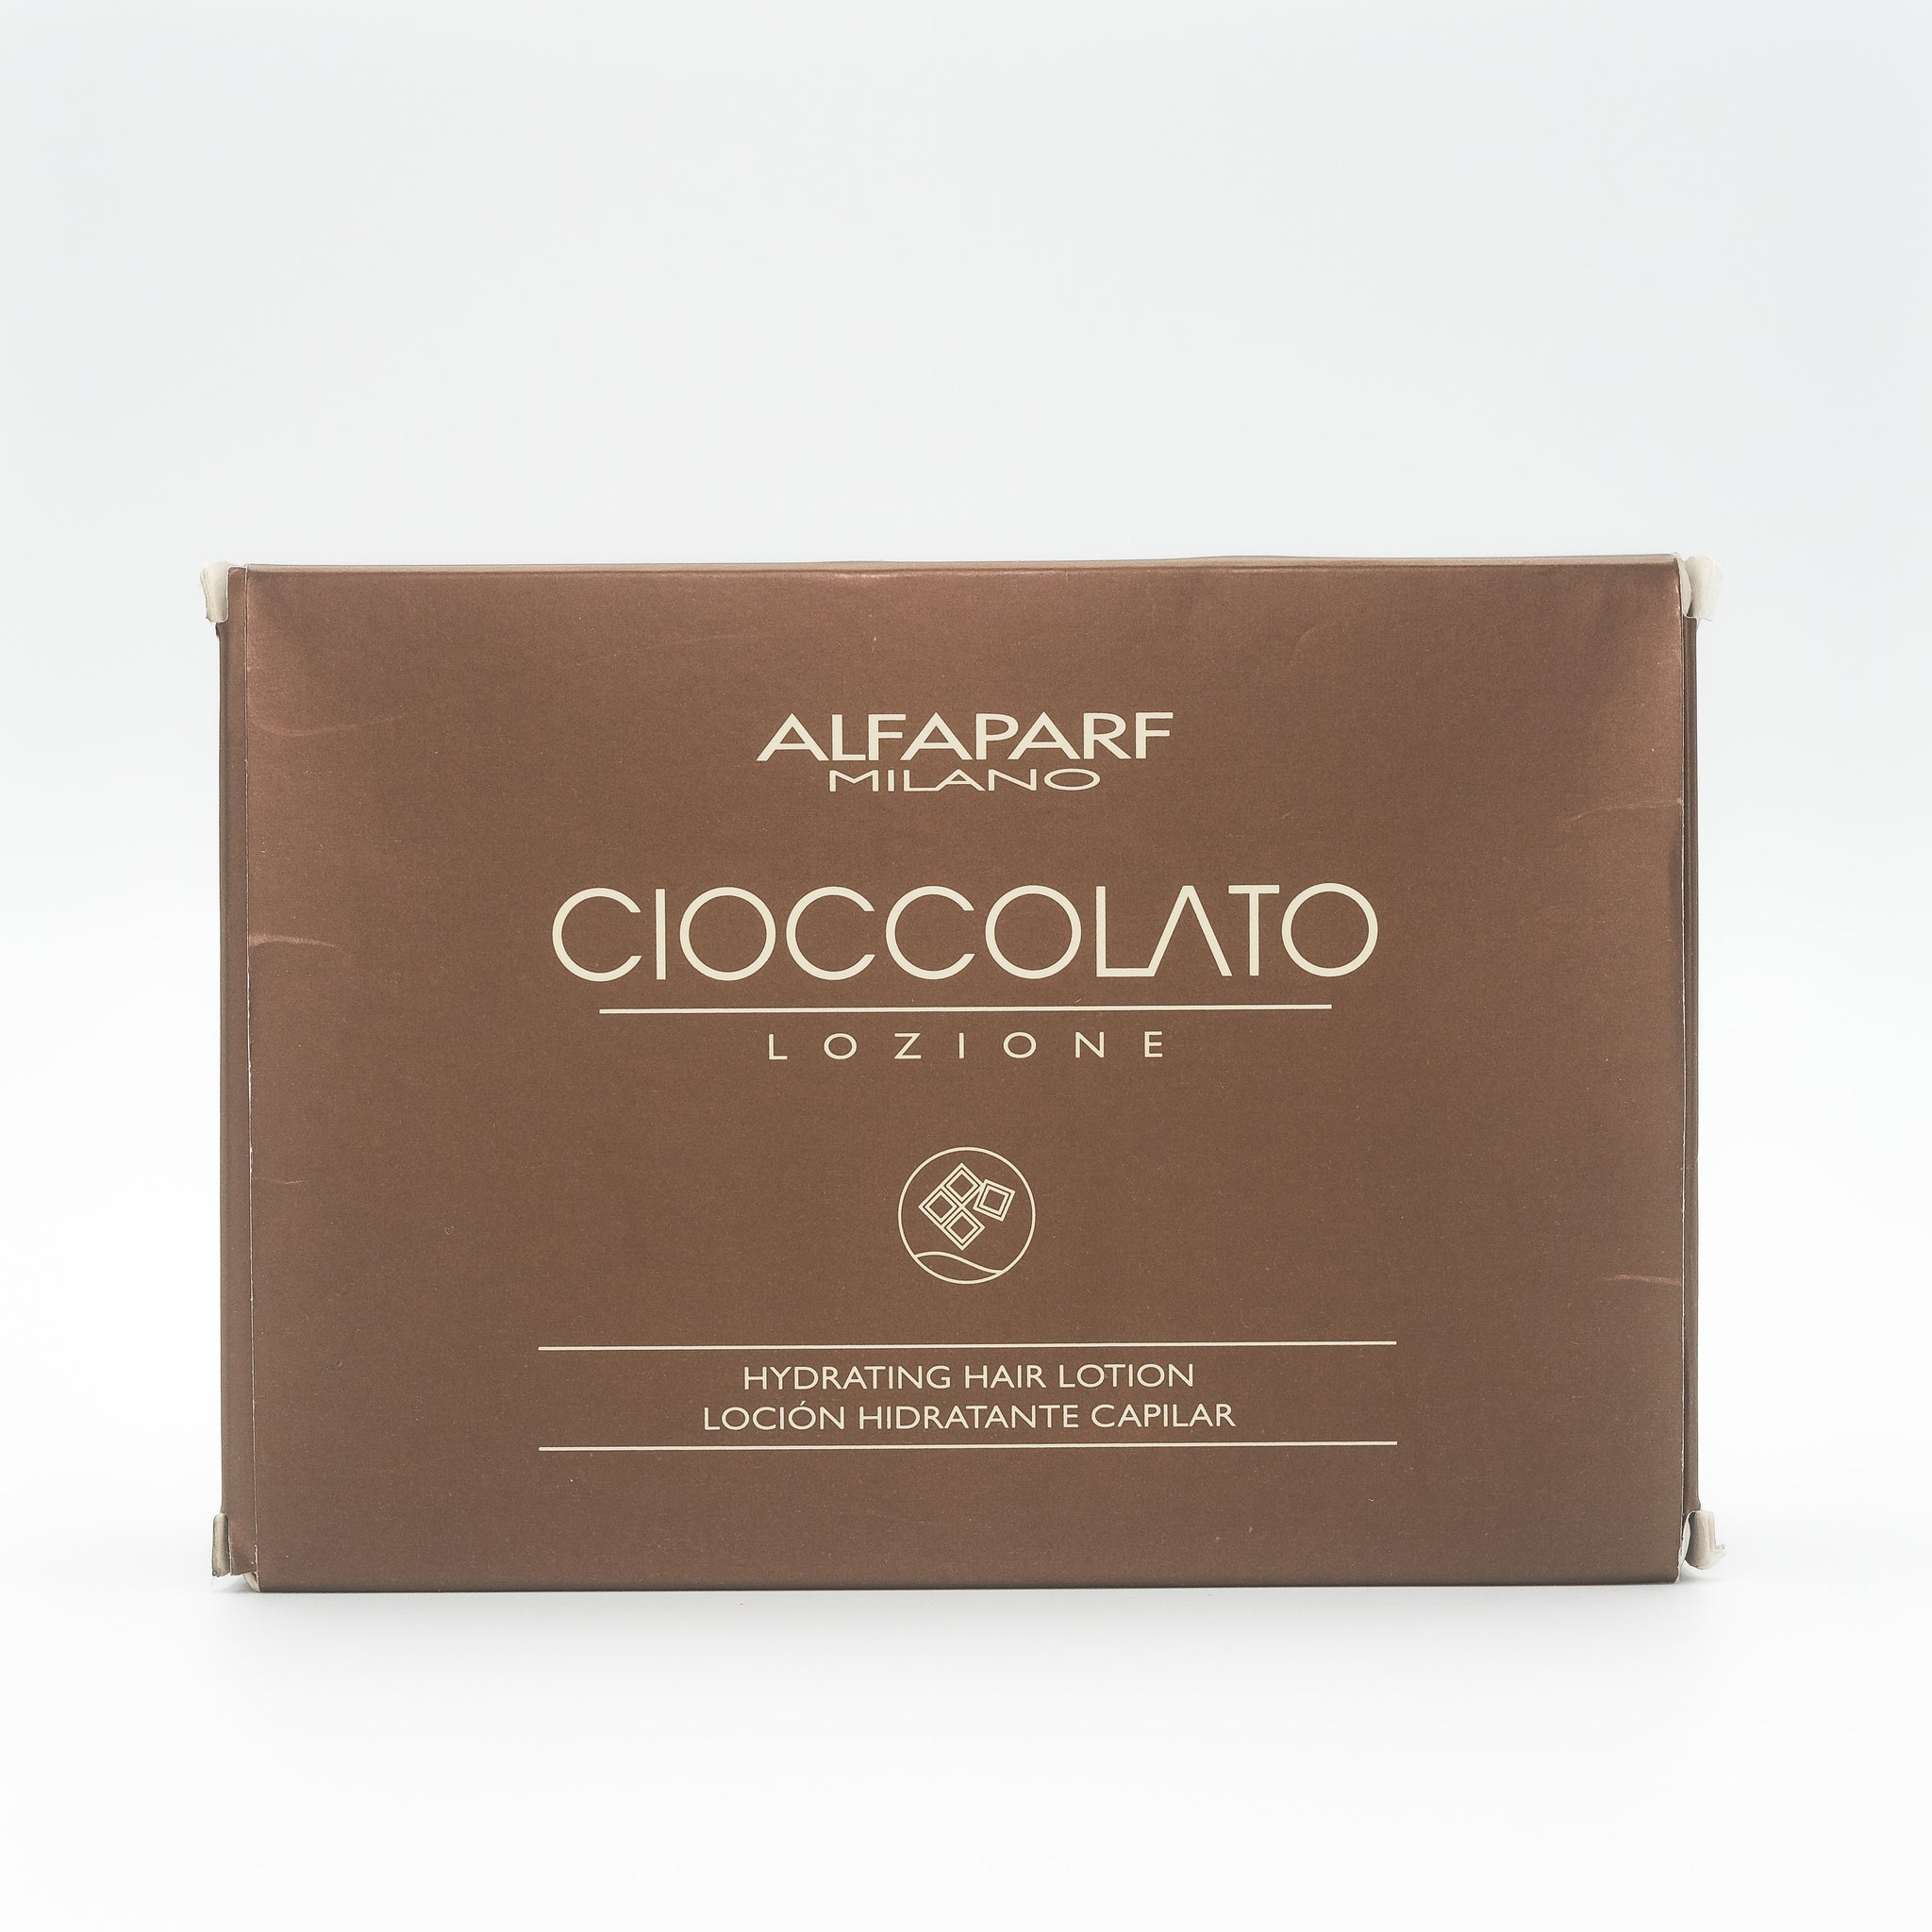 ALFAPARF Cioccolato Lozione Hydrating Hair Lotion 12 pack 0.51 oz